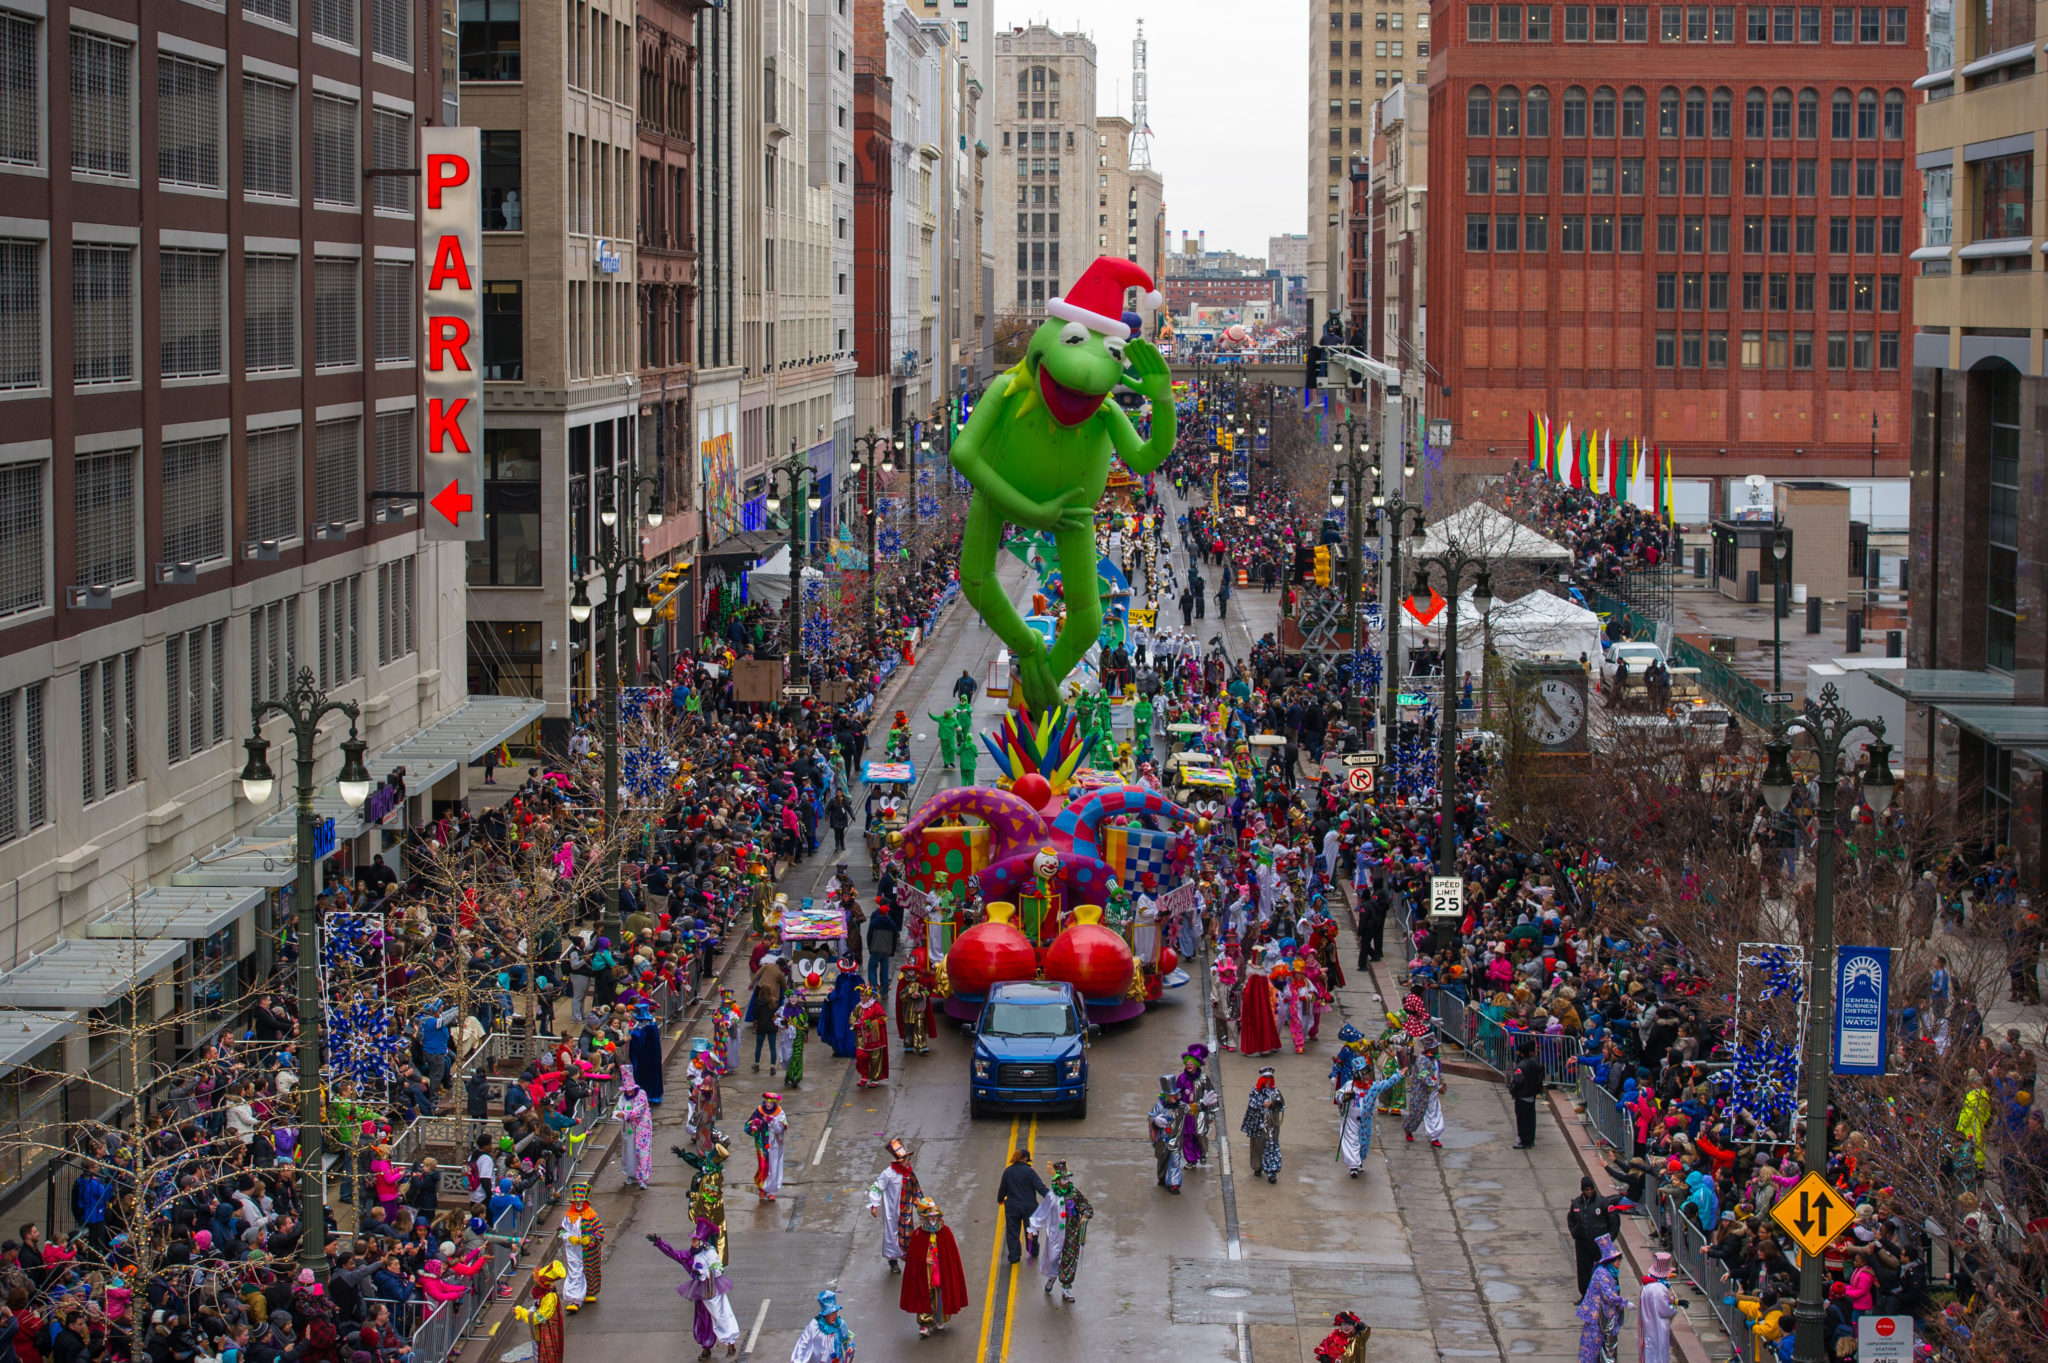 2015. America's Thanksgiving Parade The Parade Company